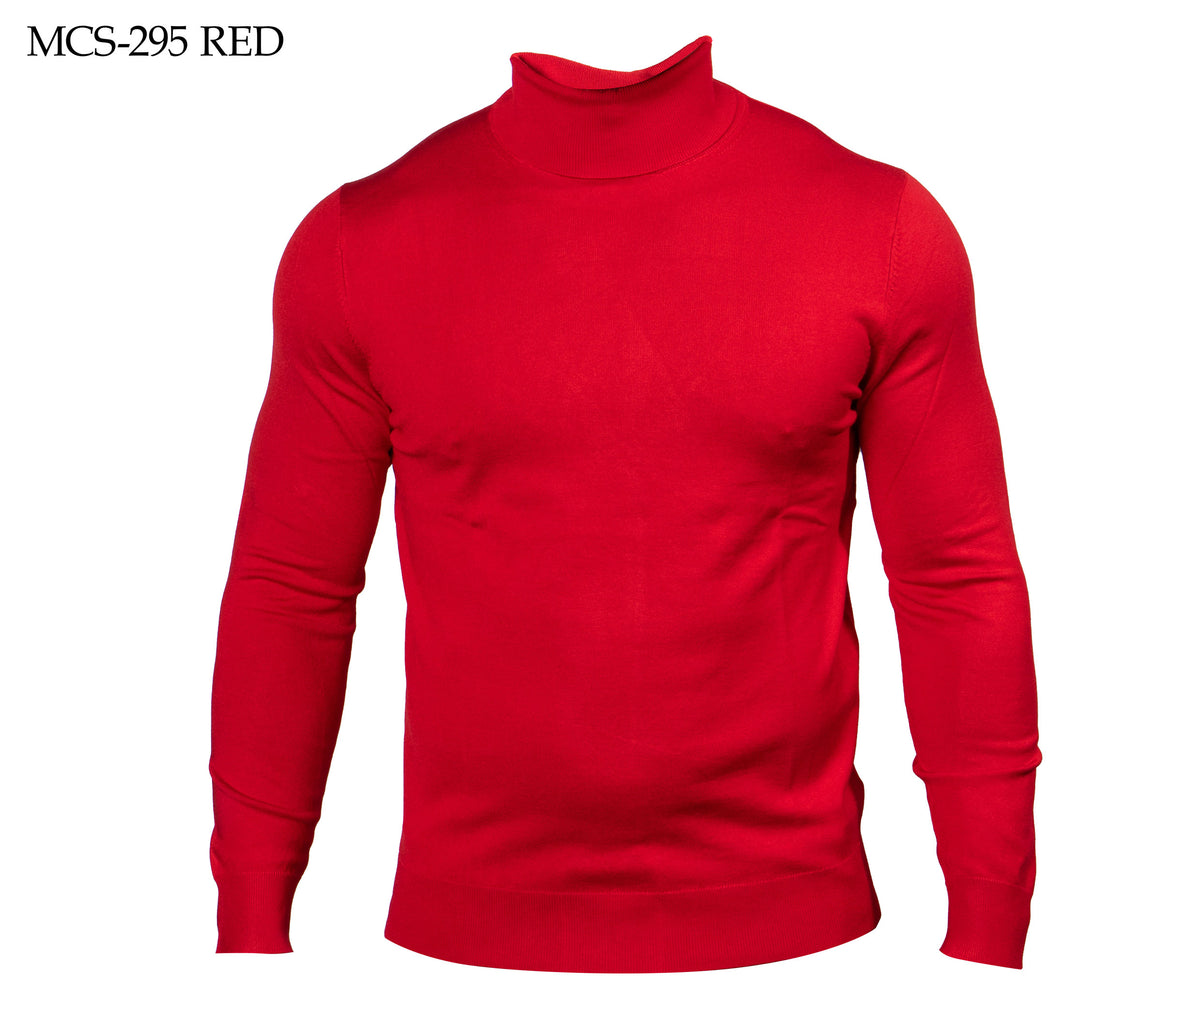 Prestige Red Turtle Neck Elite Sweater - Dudes Boutique